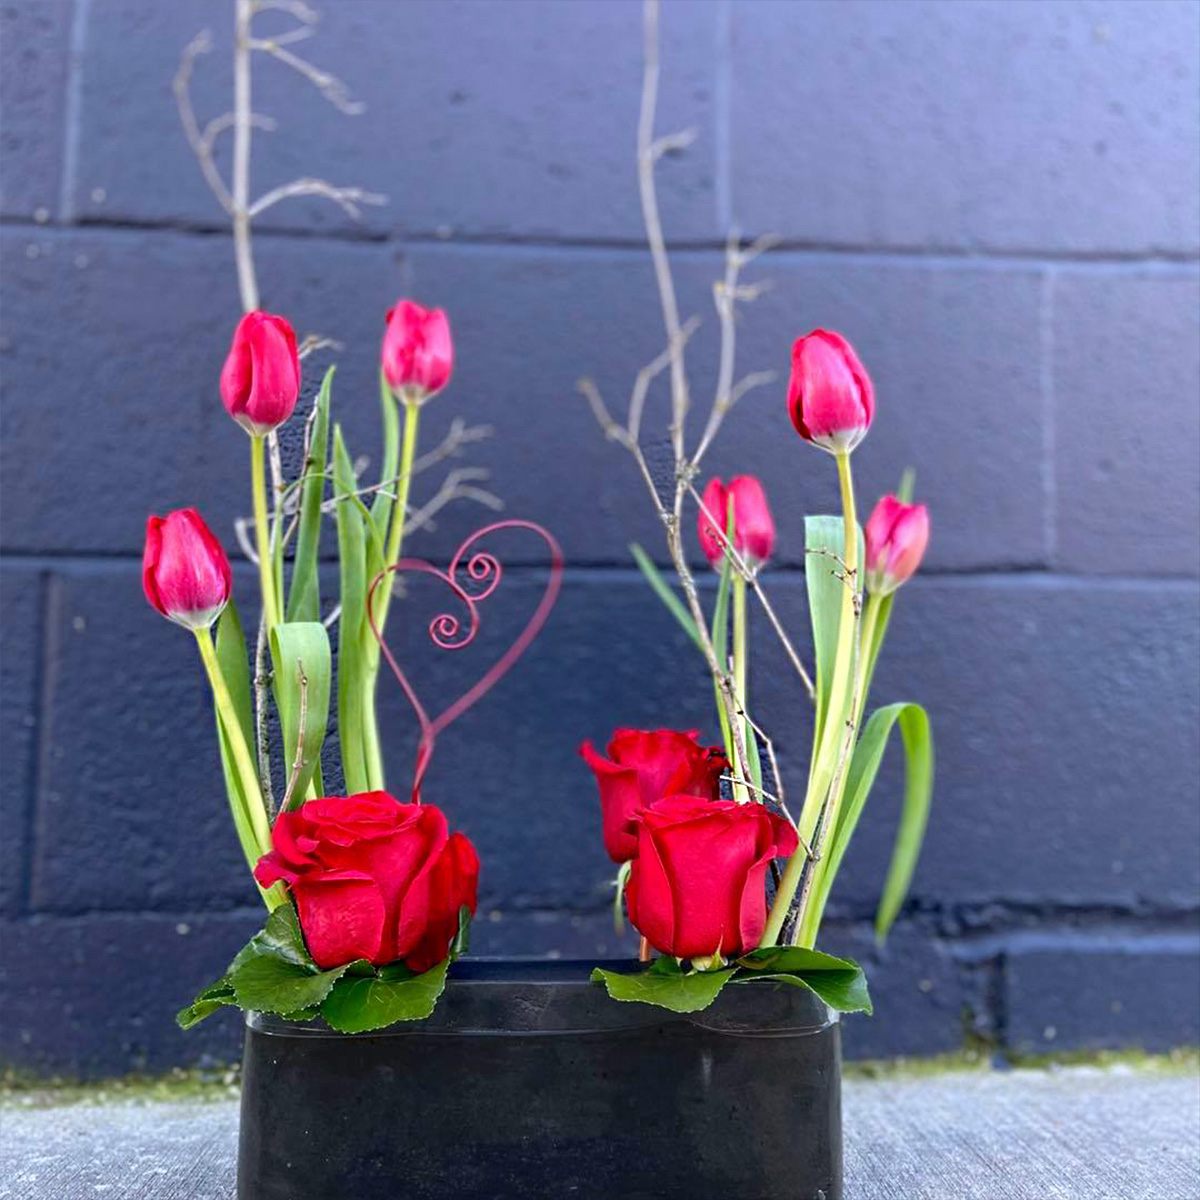 Valentine’s Day Preparations at Floral Design Institute 04